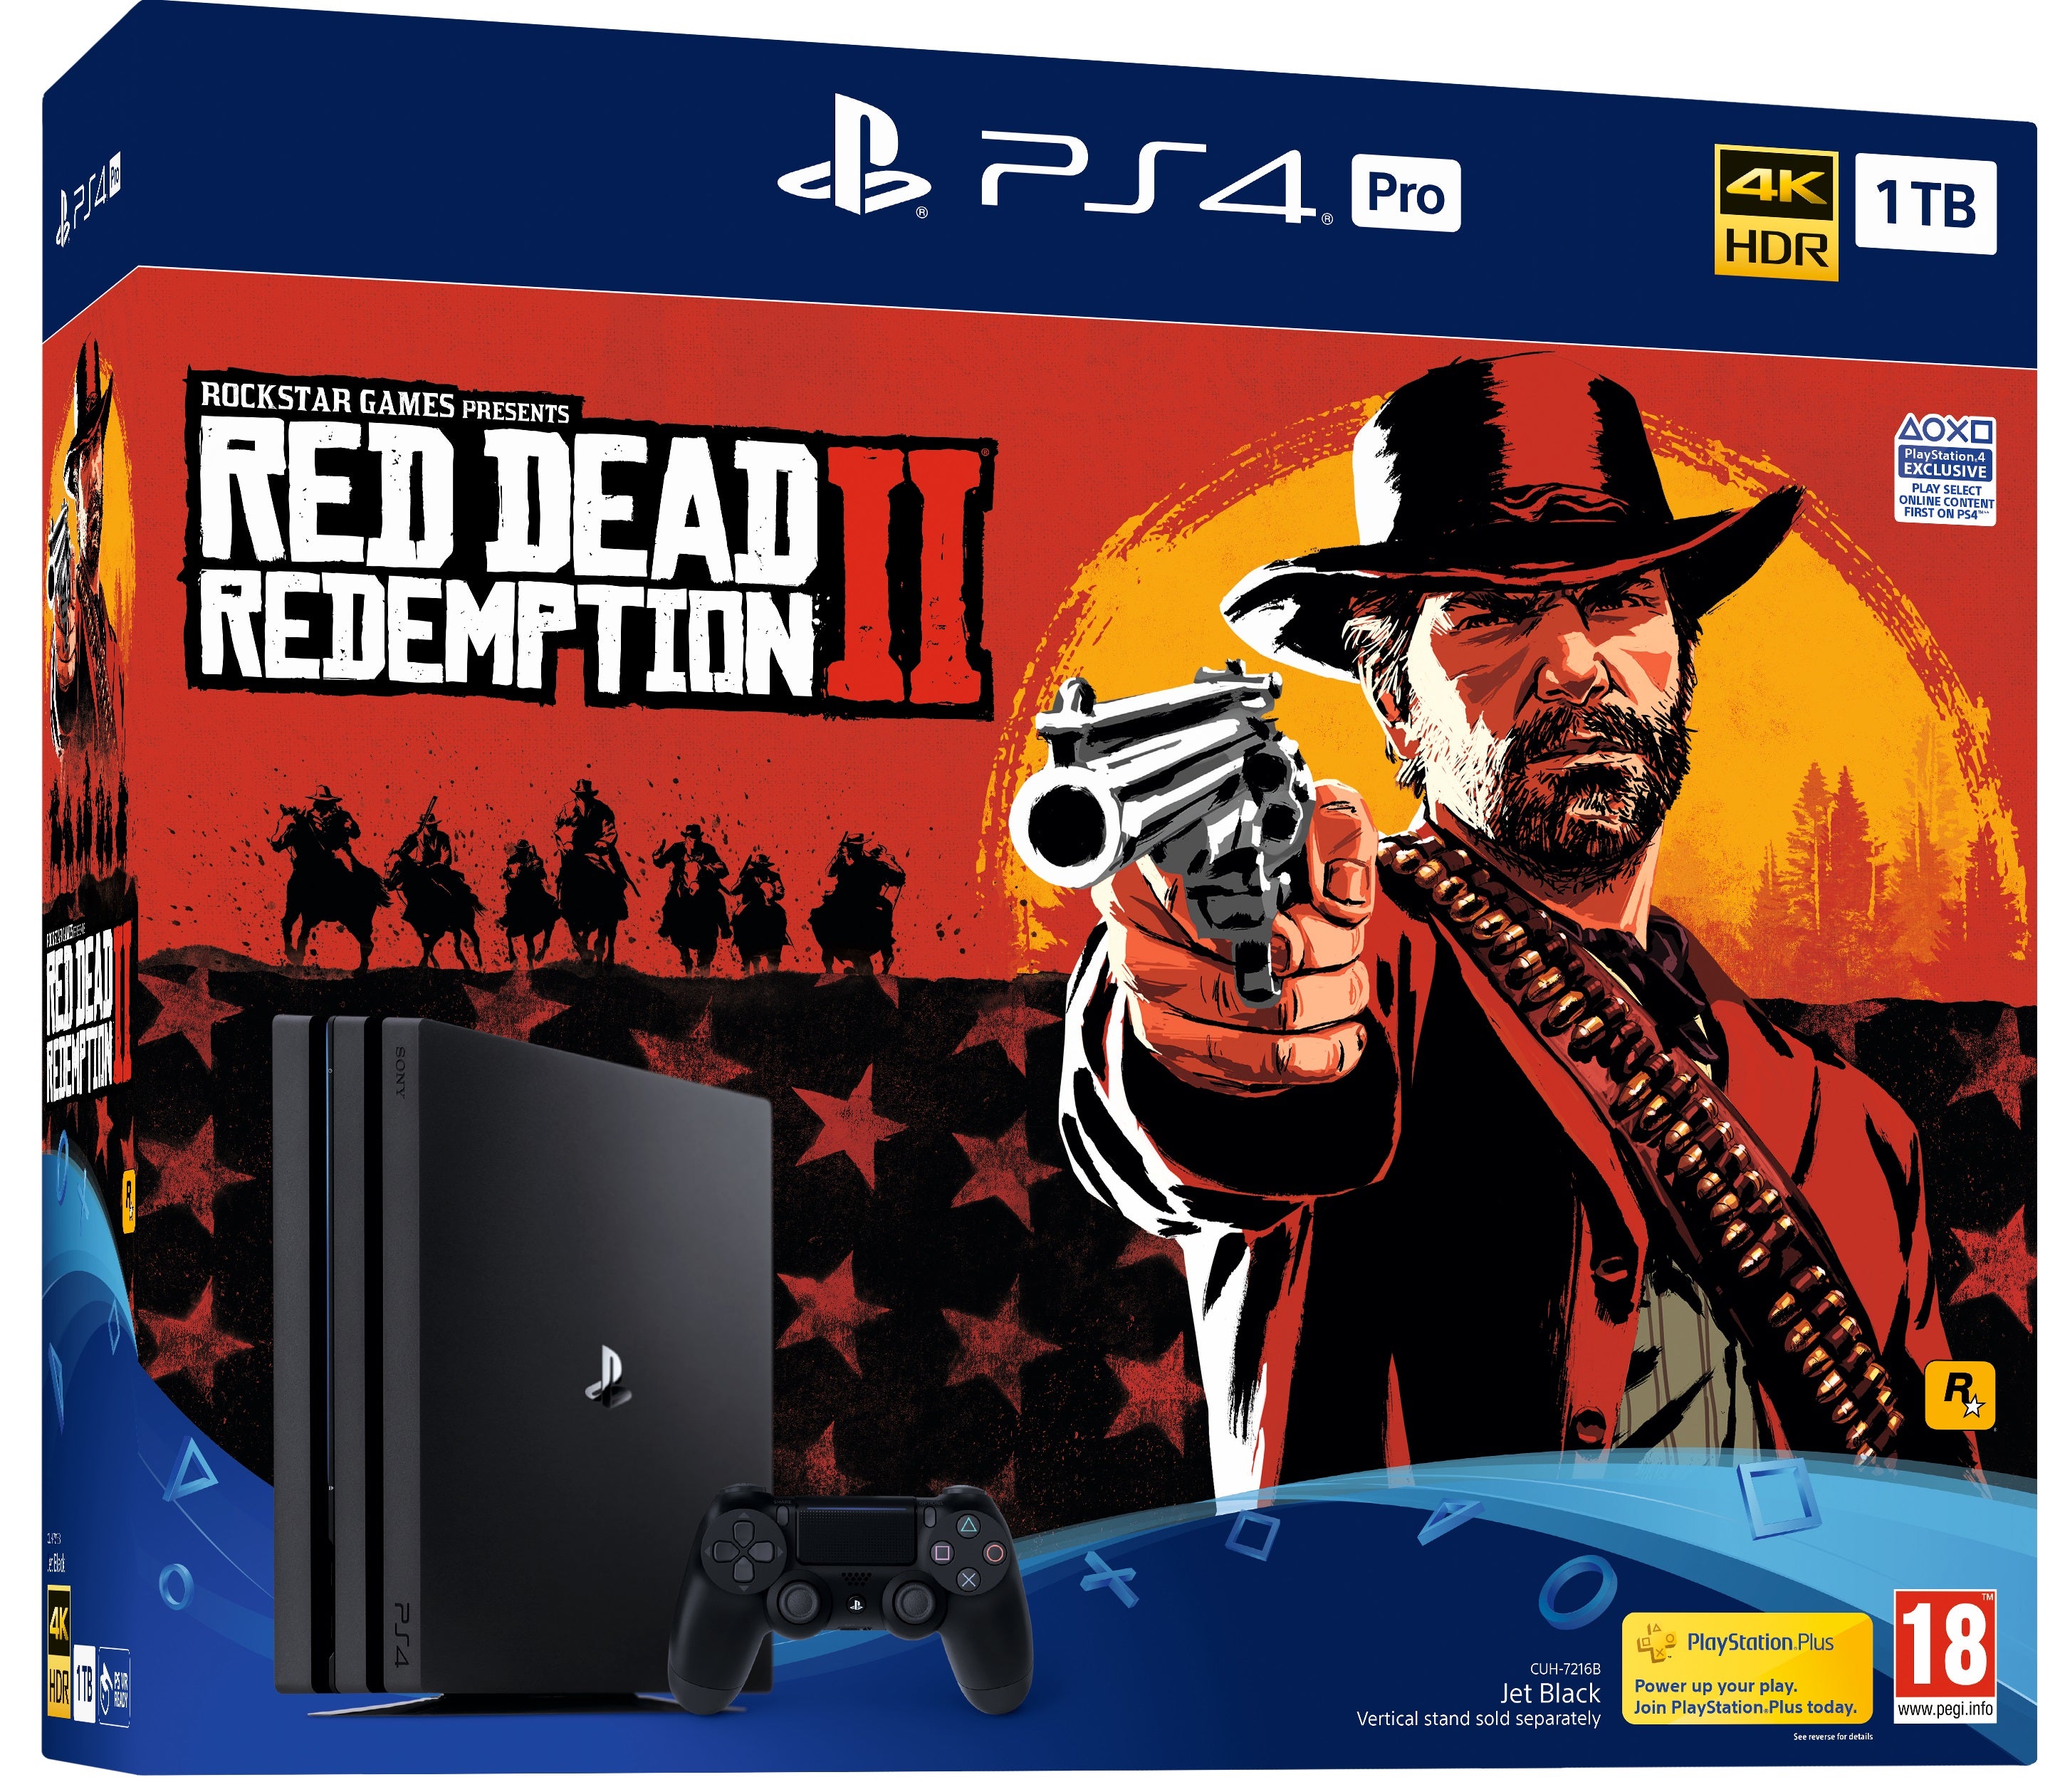 Image for Red Dead Redemption 2 PS4 Pro bundle reveals game size